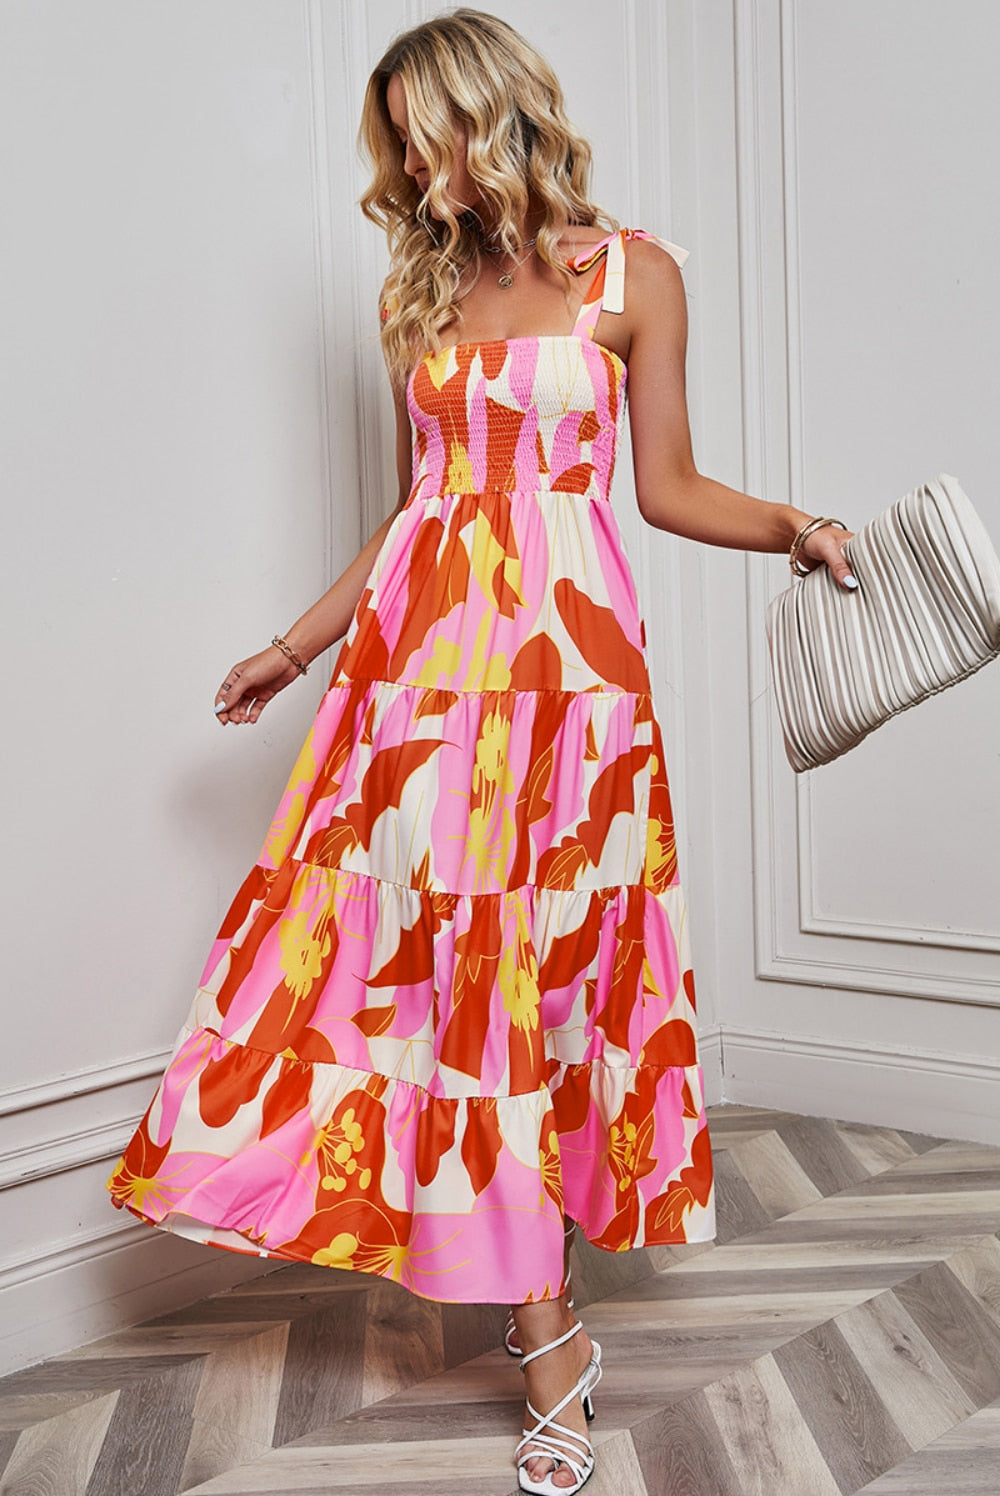 Summer Slit Dress Beach Dot Holiday Dresses for Women - WD8204